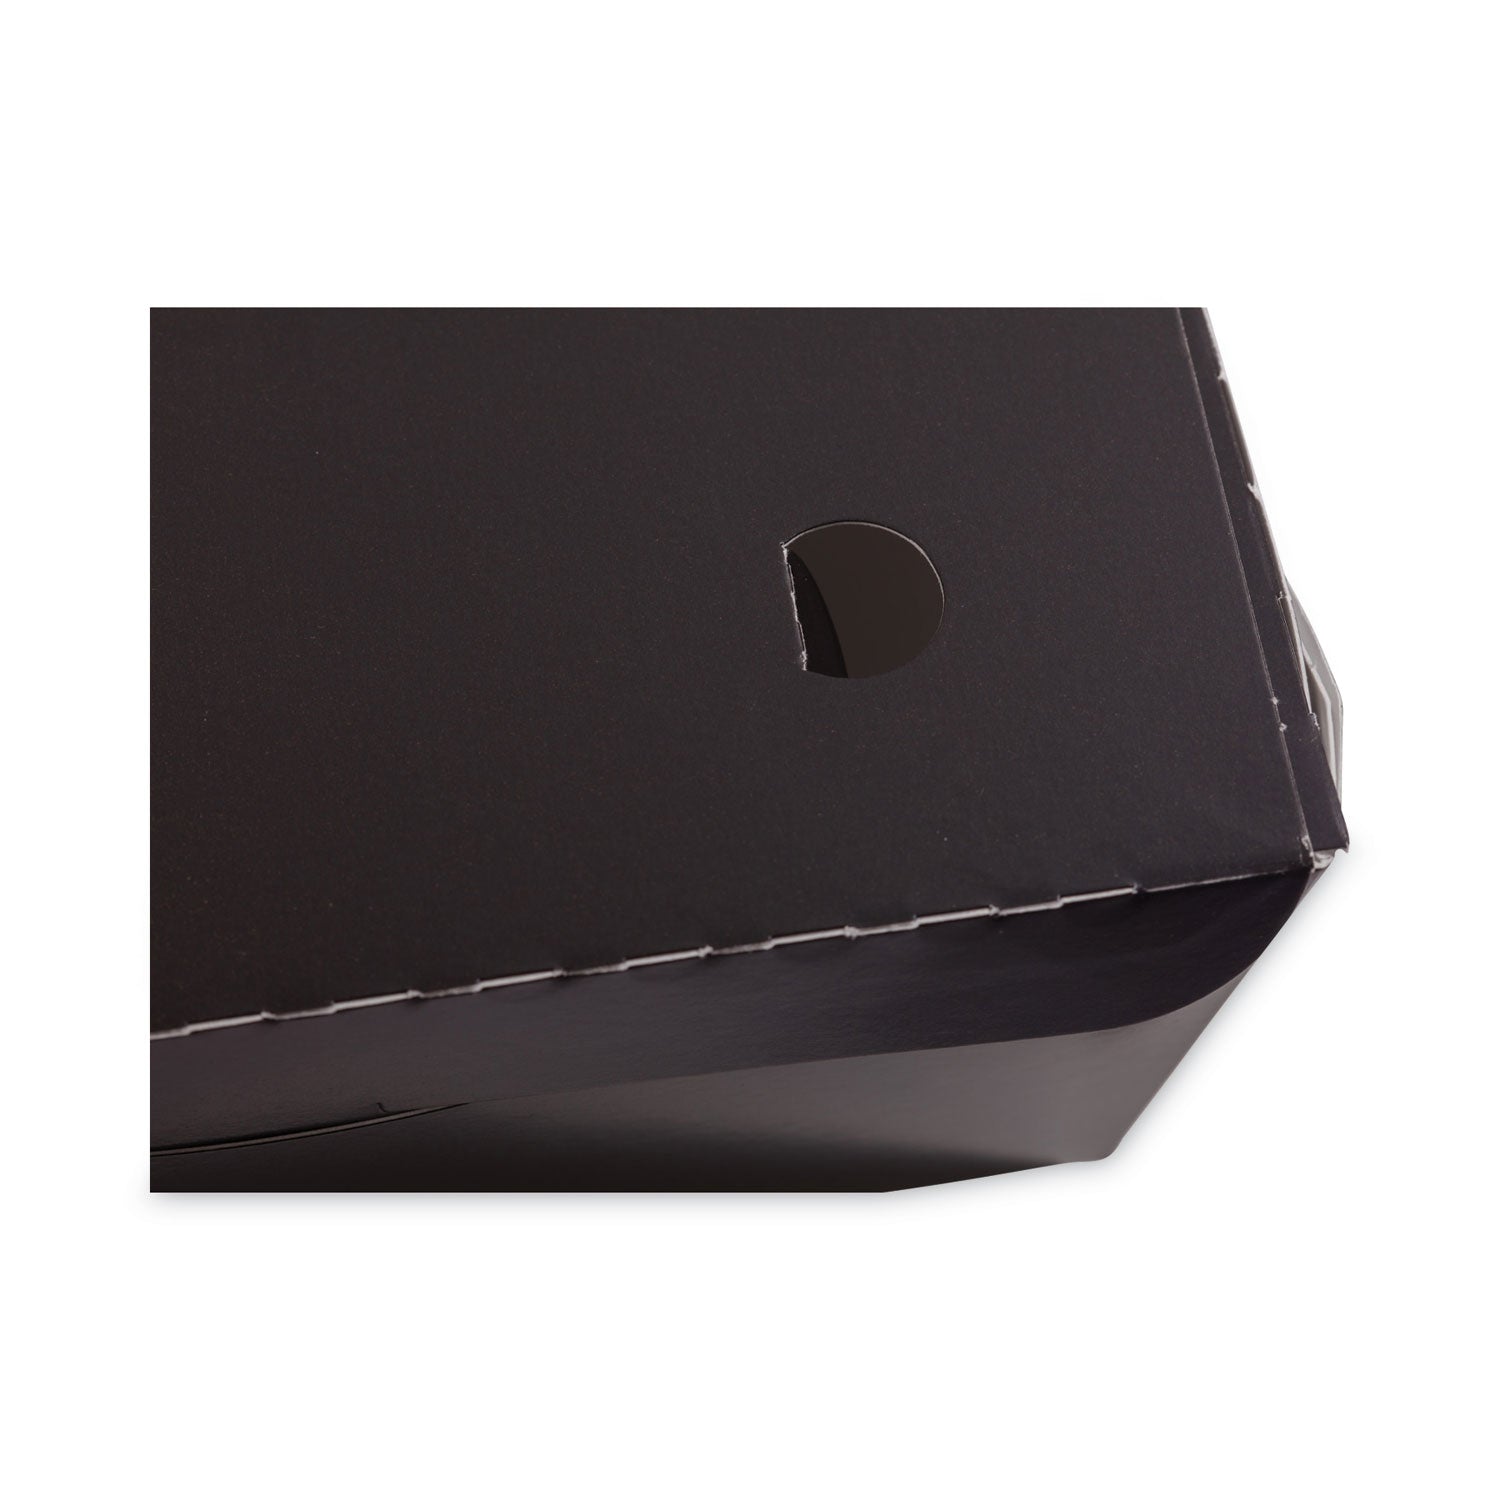 earthchoice-onebox-paper-box-77-oz-9-x-485-x-27-black-162-carton_pctnob04sb - 4